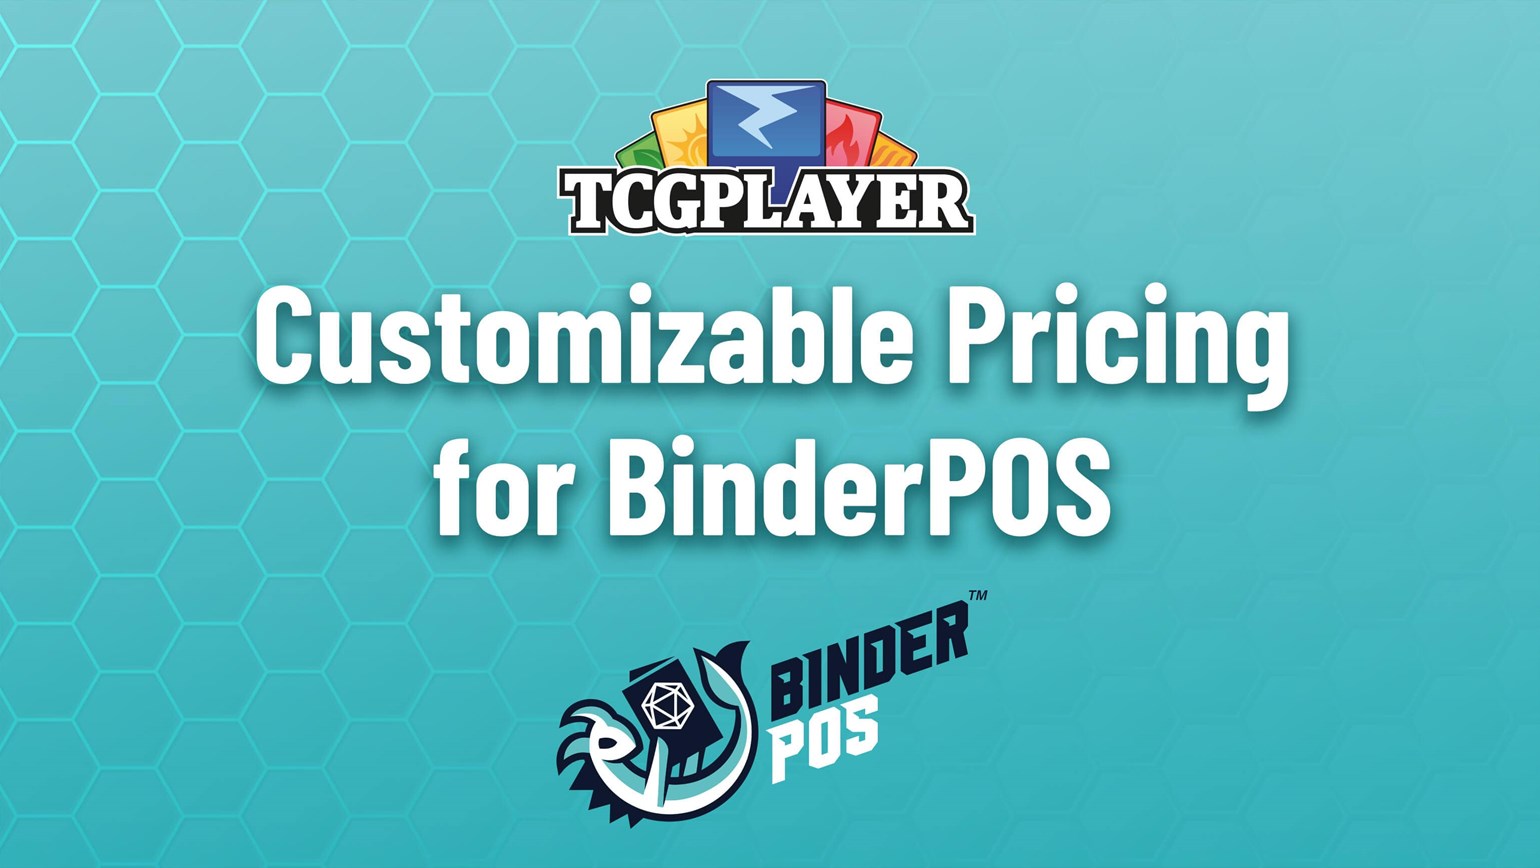 Introducing Customizable Pricing for BinderPOS